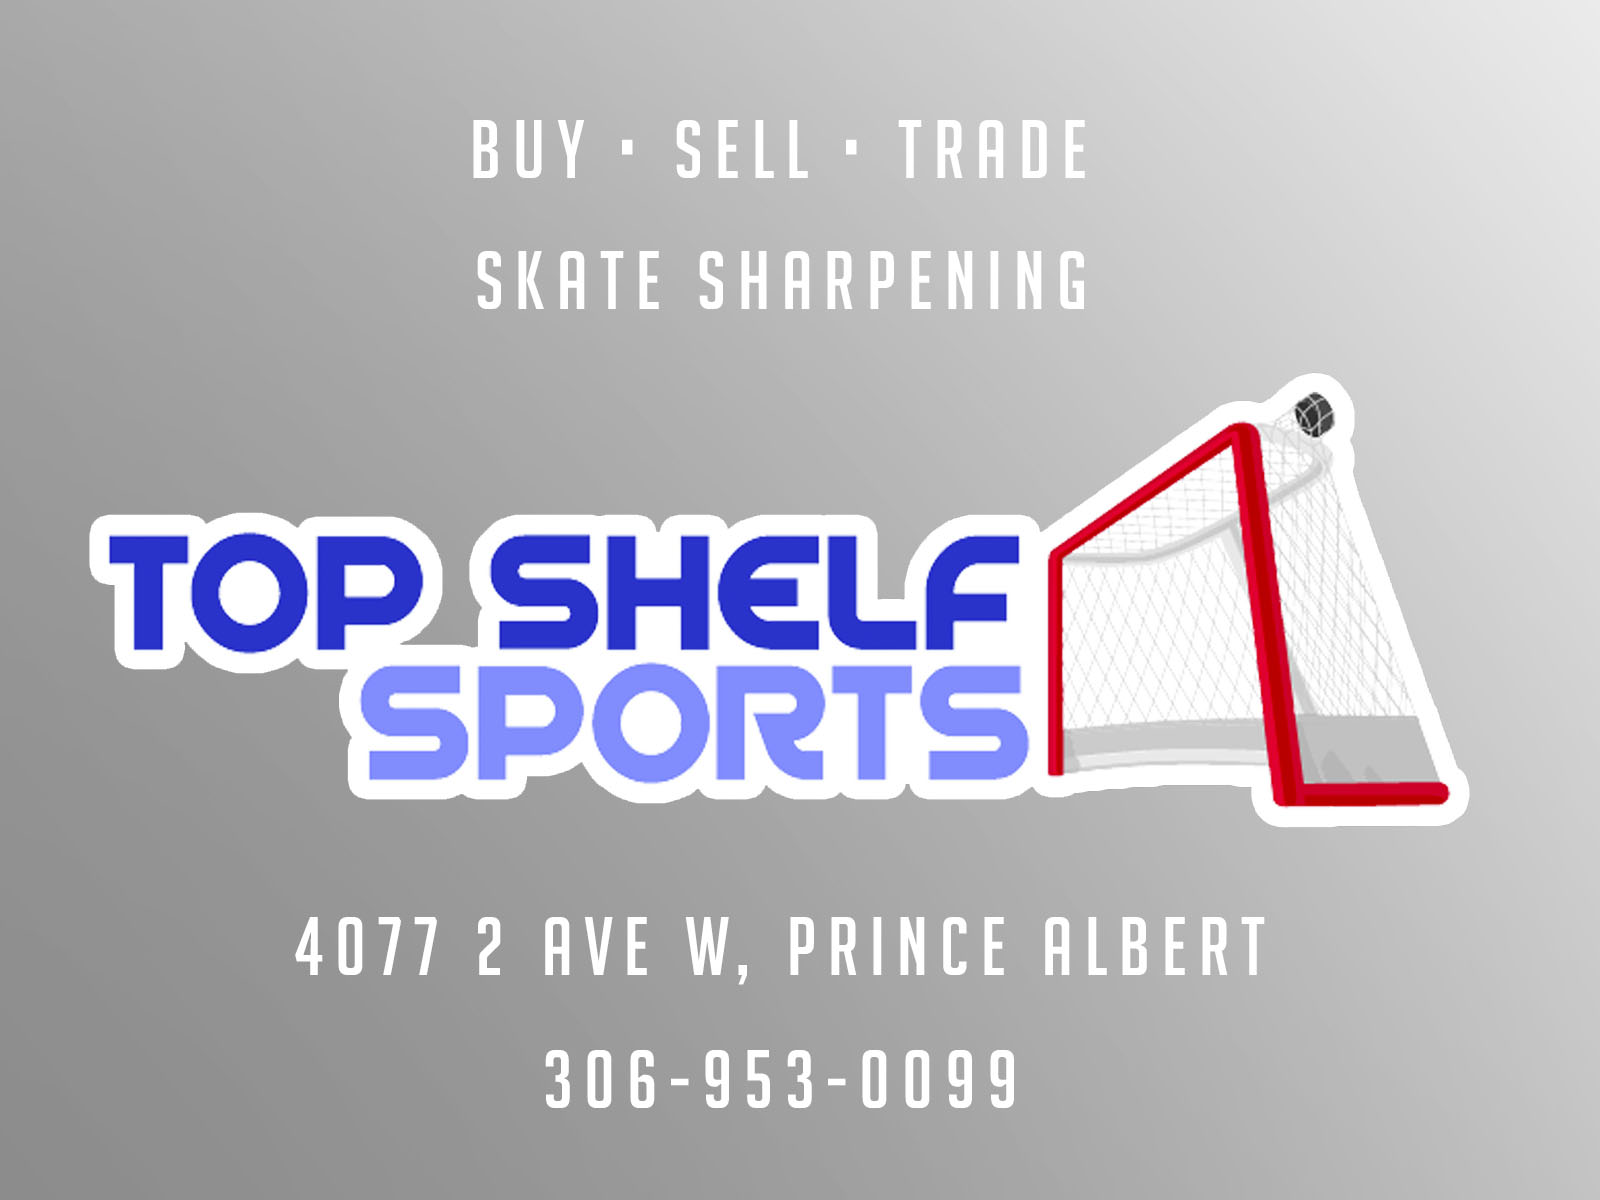 Top Shelf Sports